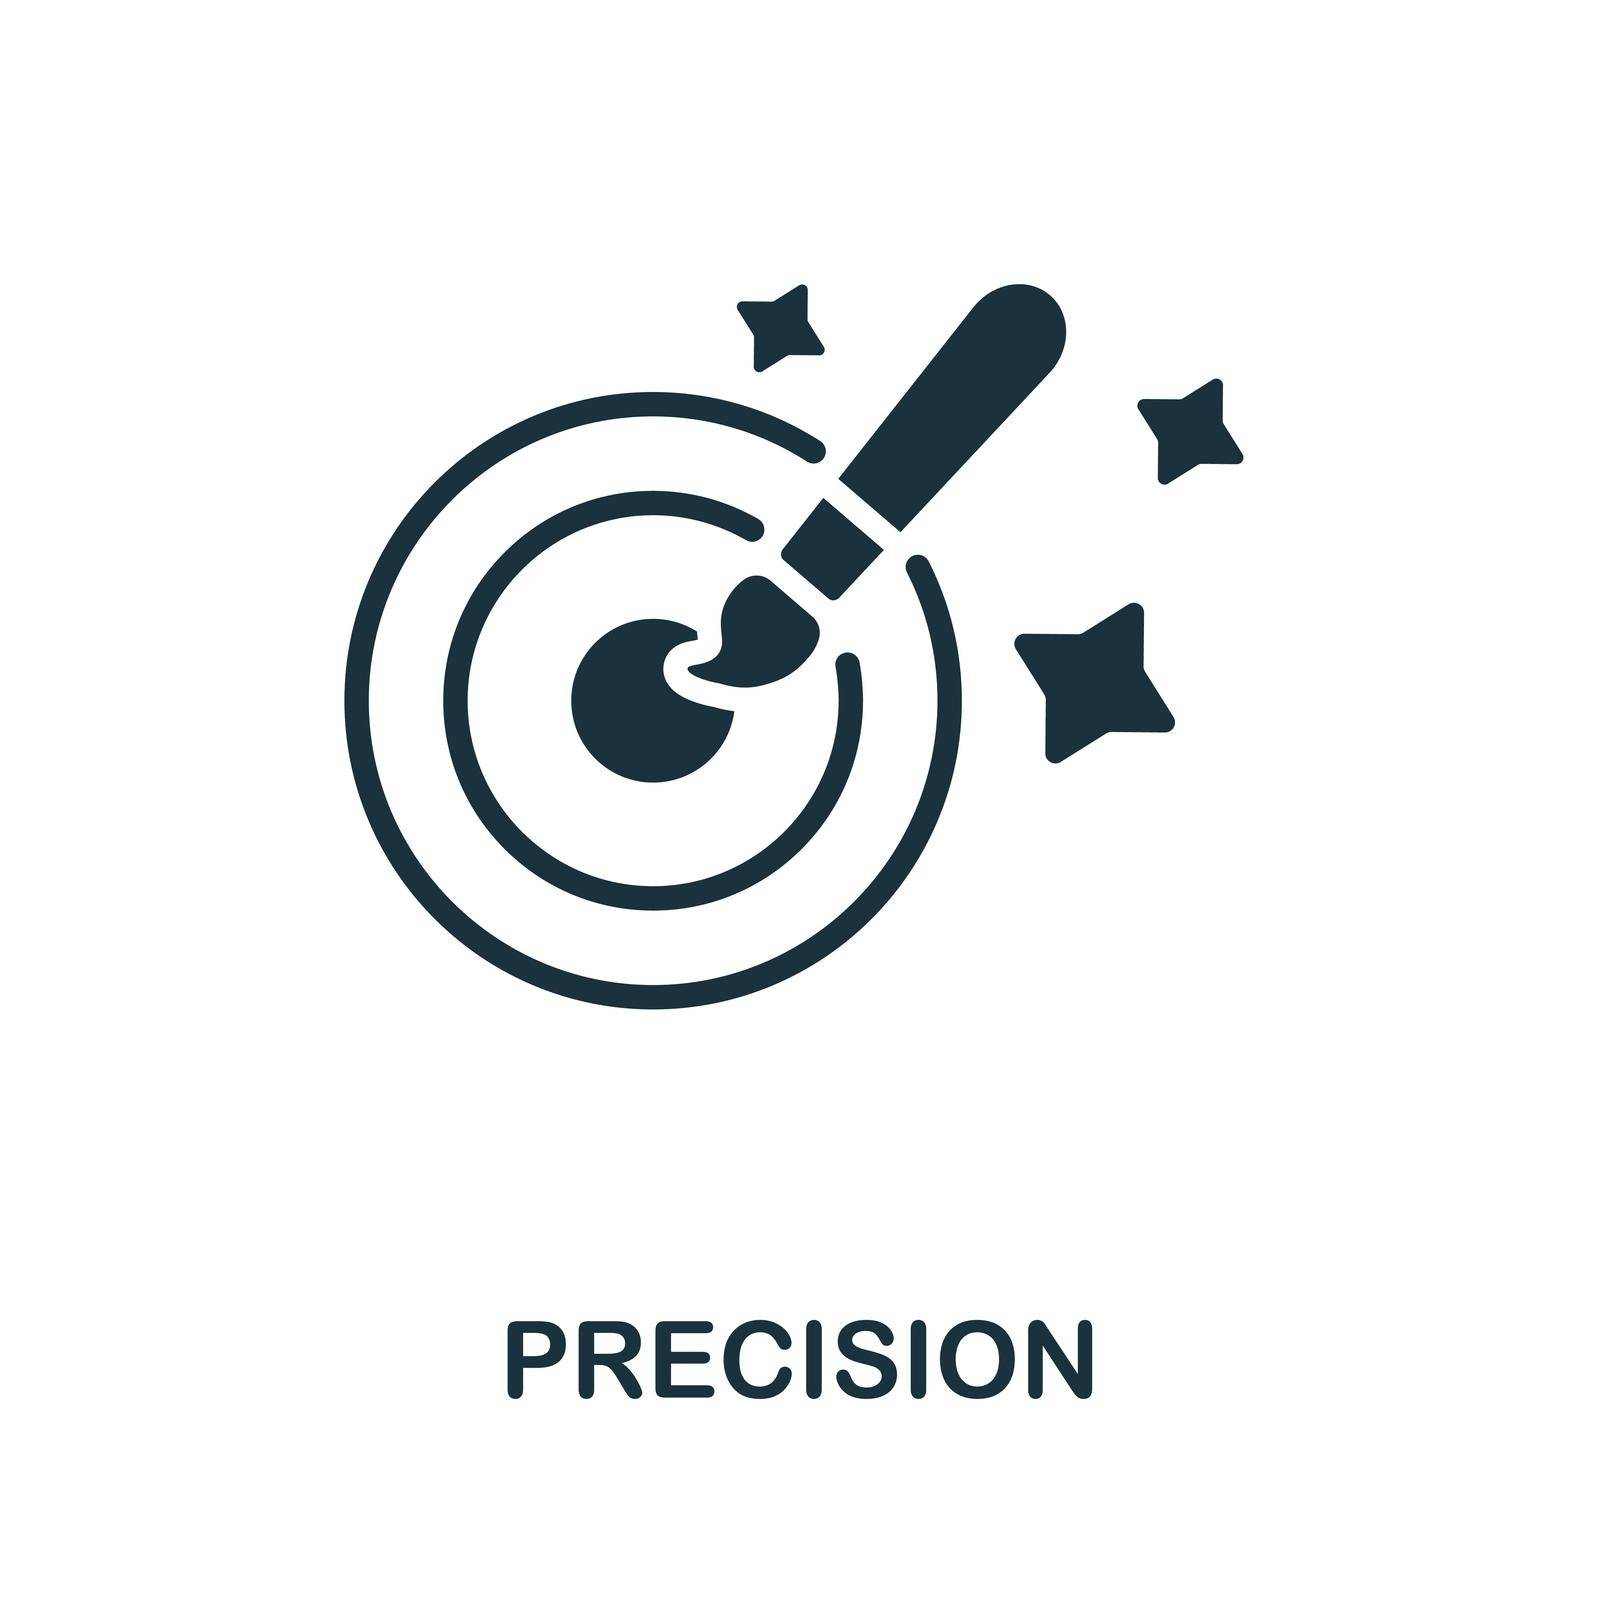 Precision icon. Black sign from graphic design collection. Creative Precision icon for web design, templates and infographics.